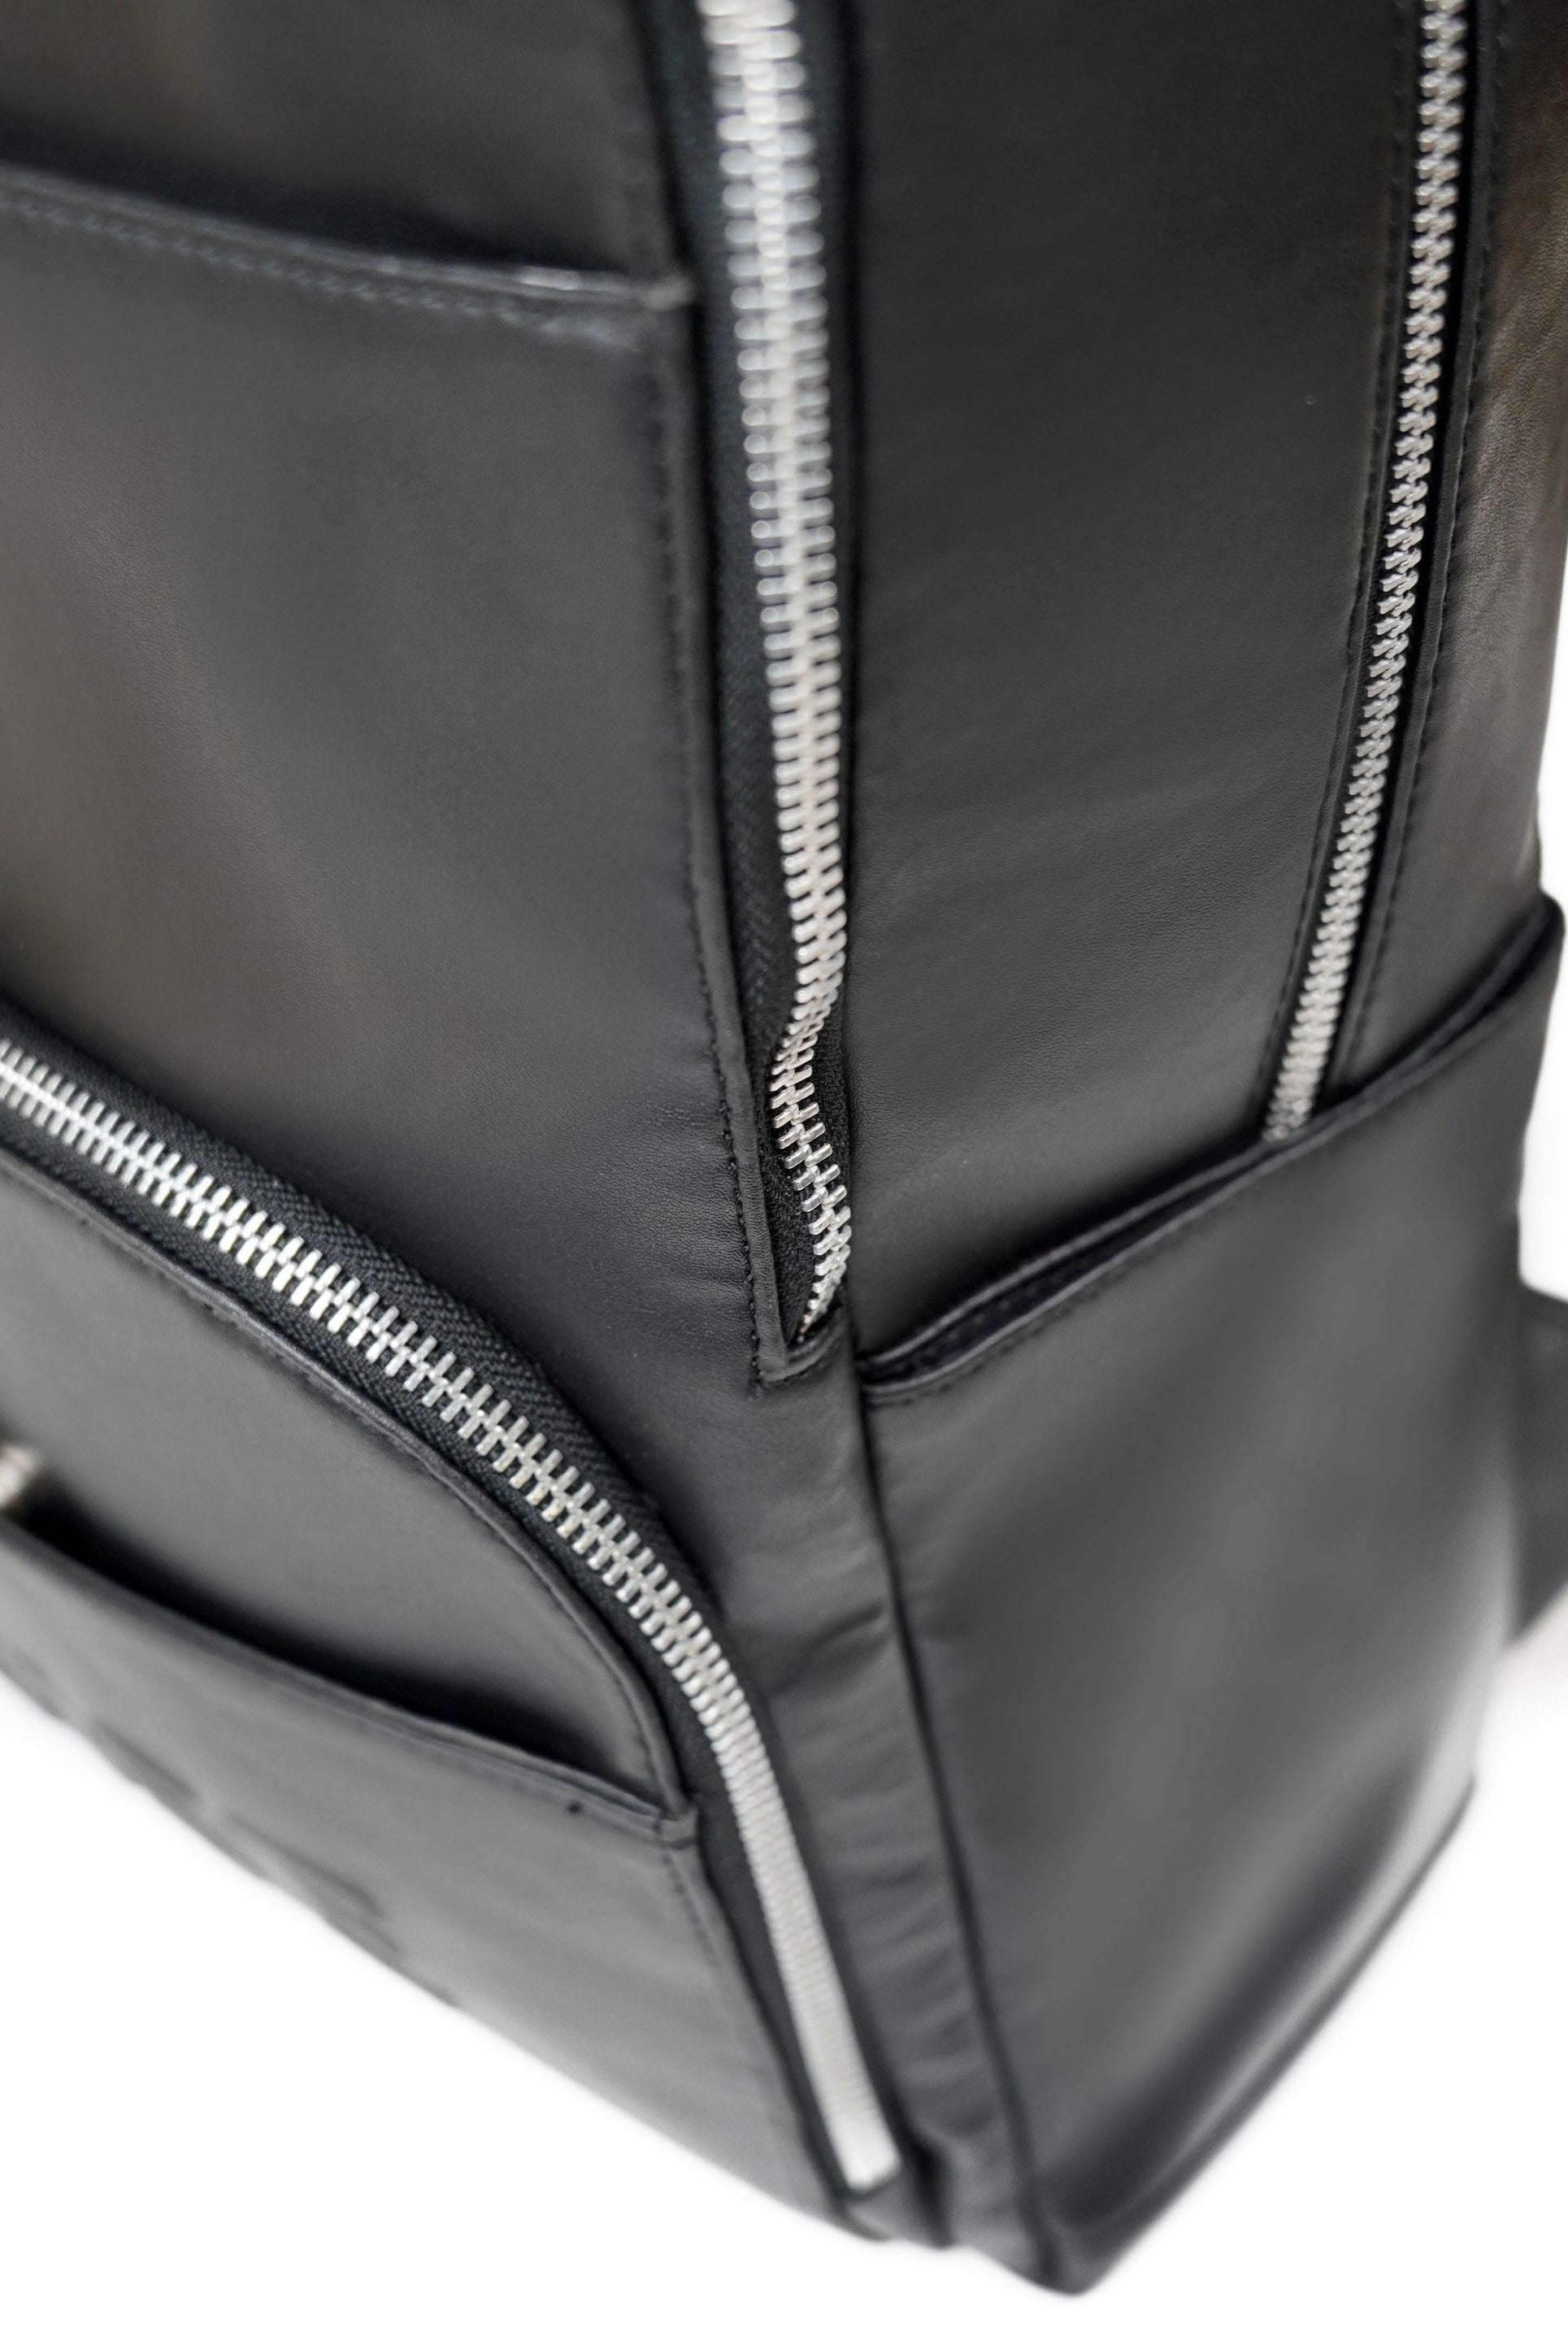 100% vegan leather backpack